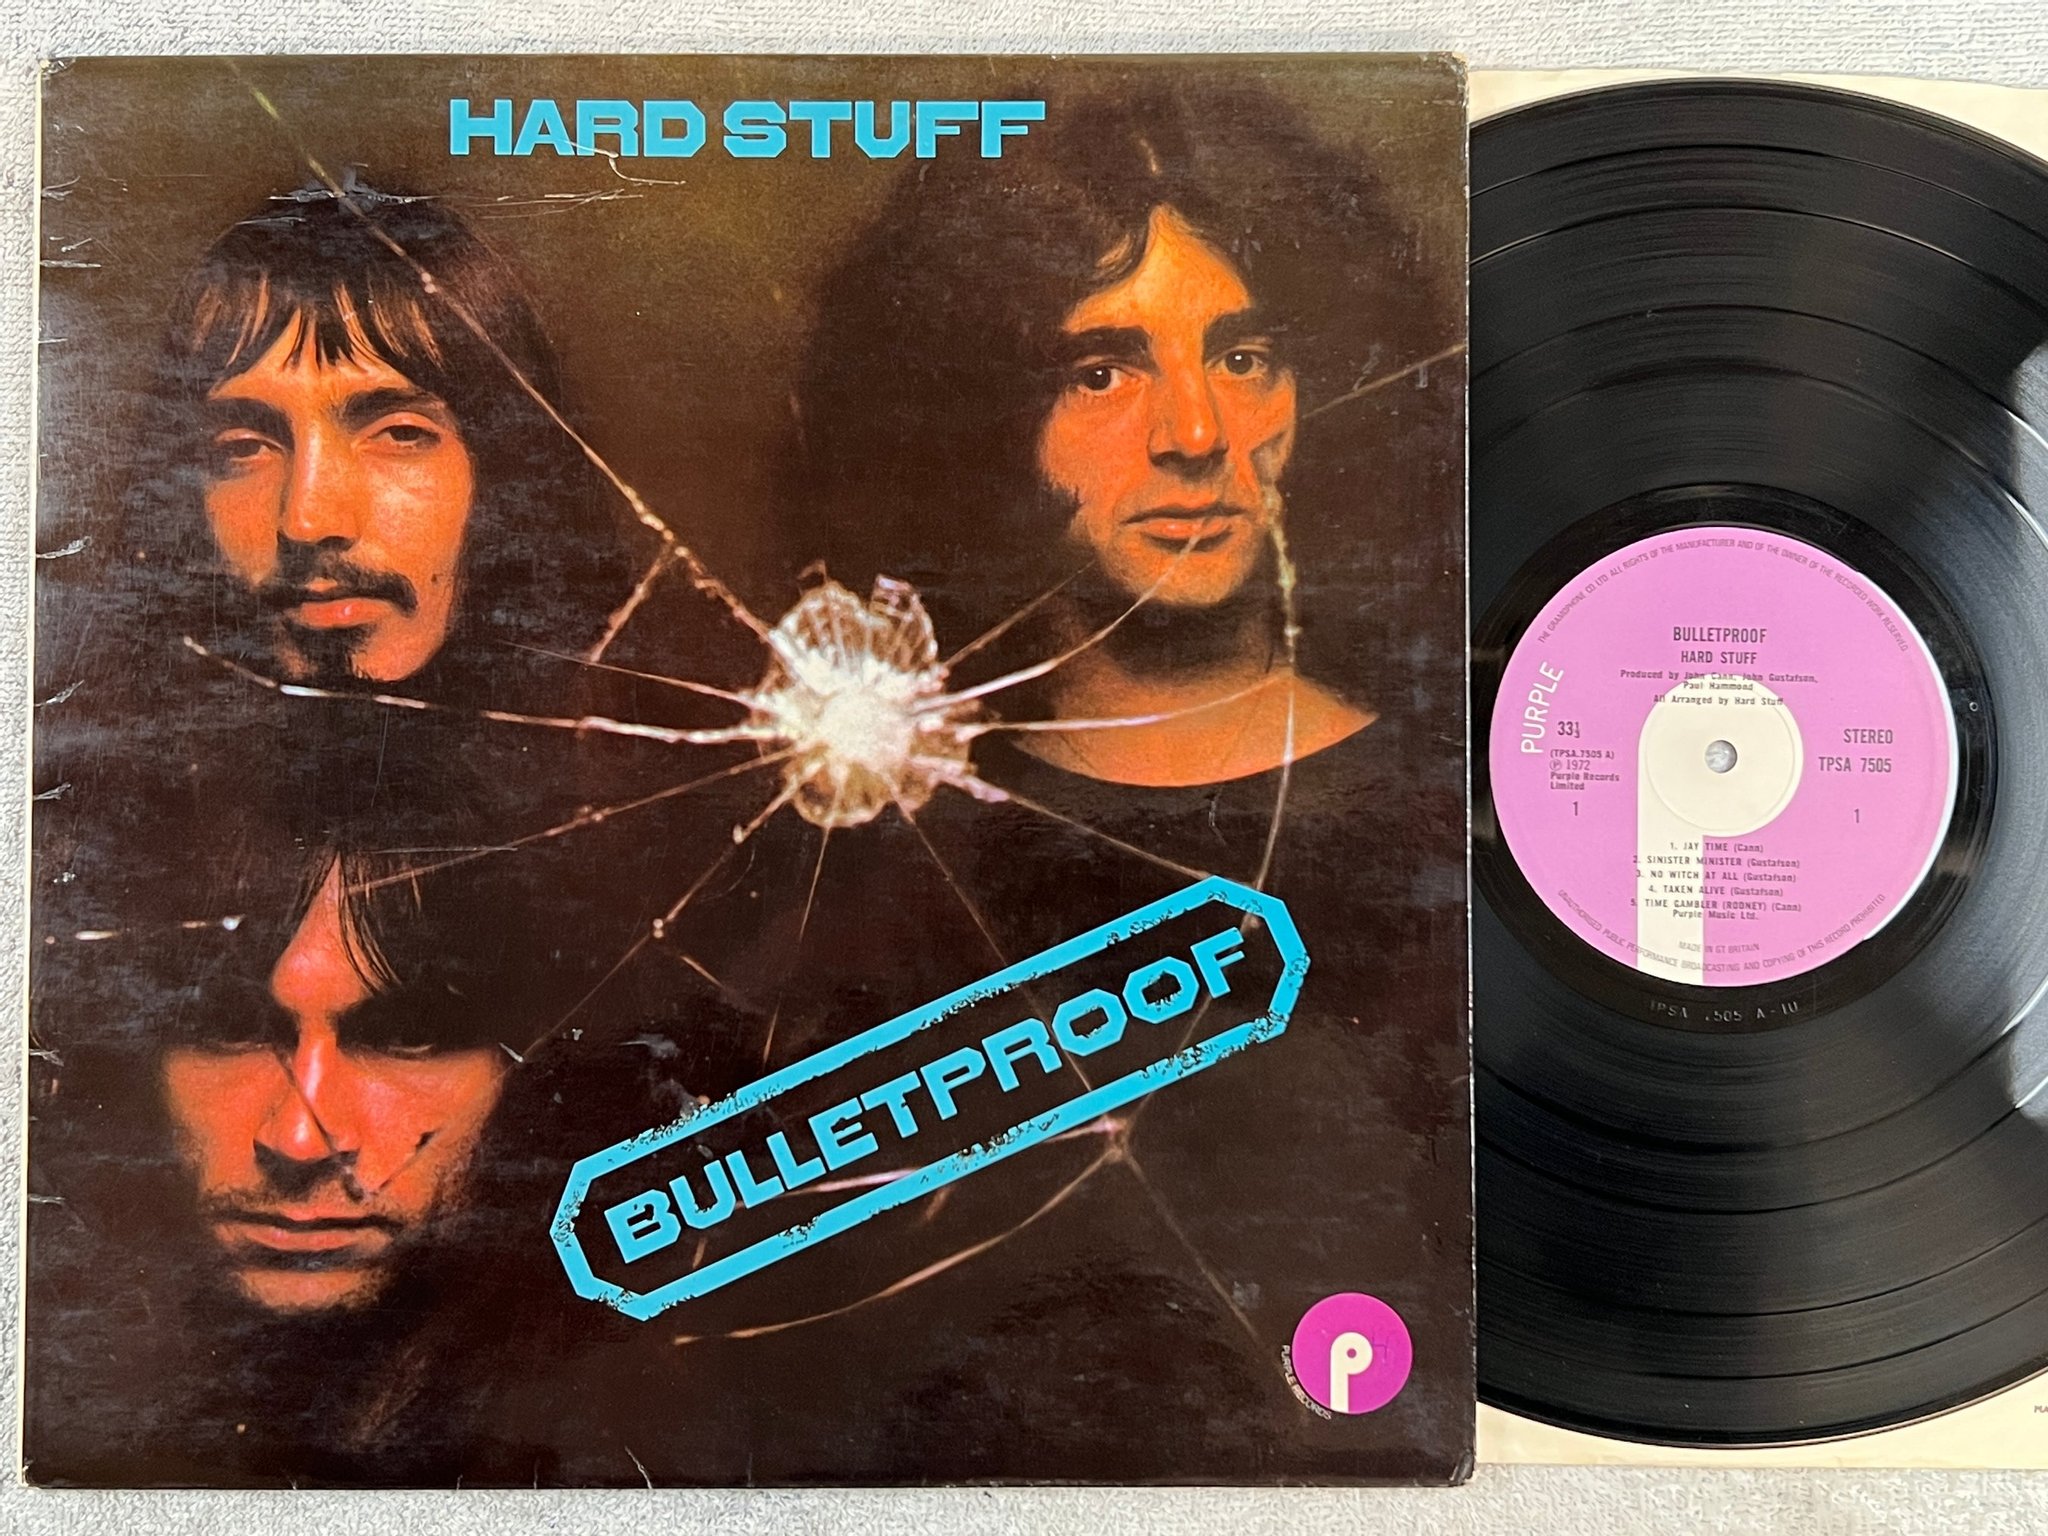 Omslagsbild för skivan HARD STUFF bulletproof LP -72 UK PURPLE TPSA 7505